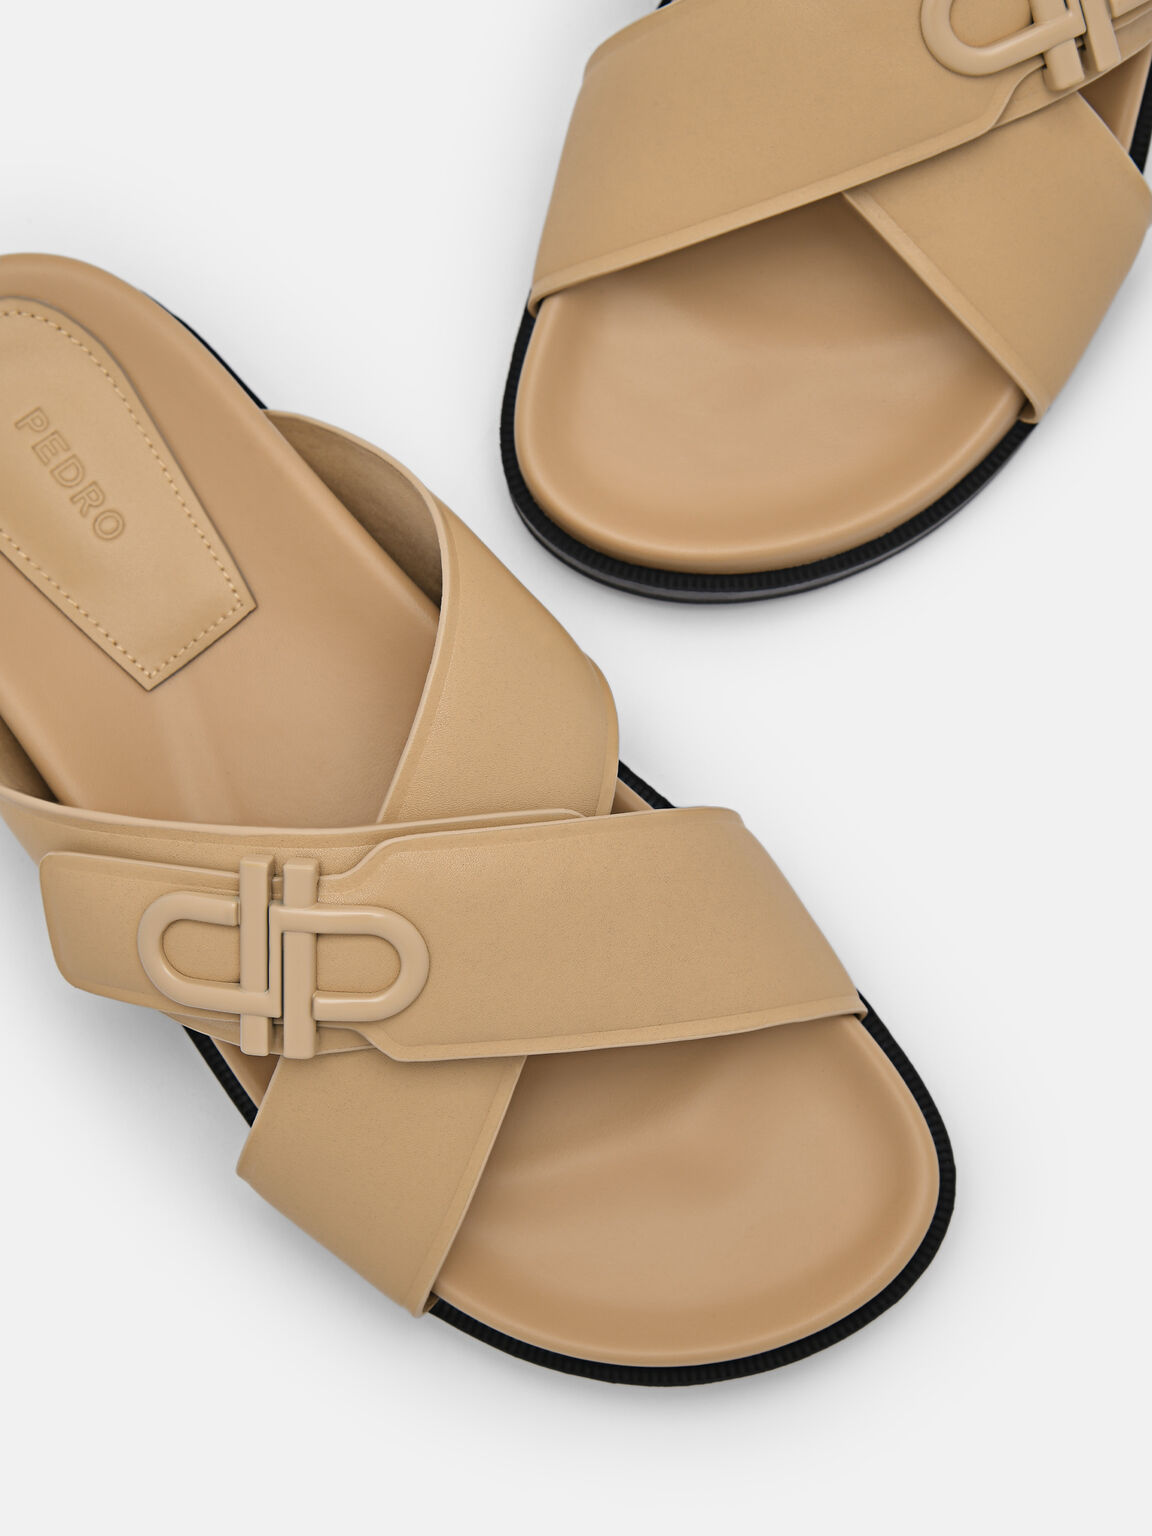 PEDRO Icon Cross Sandals, Nude